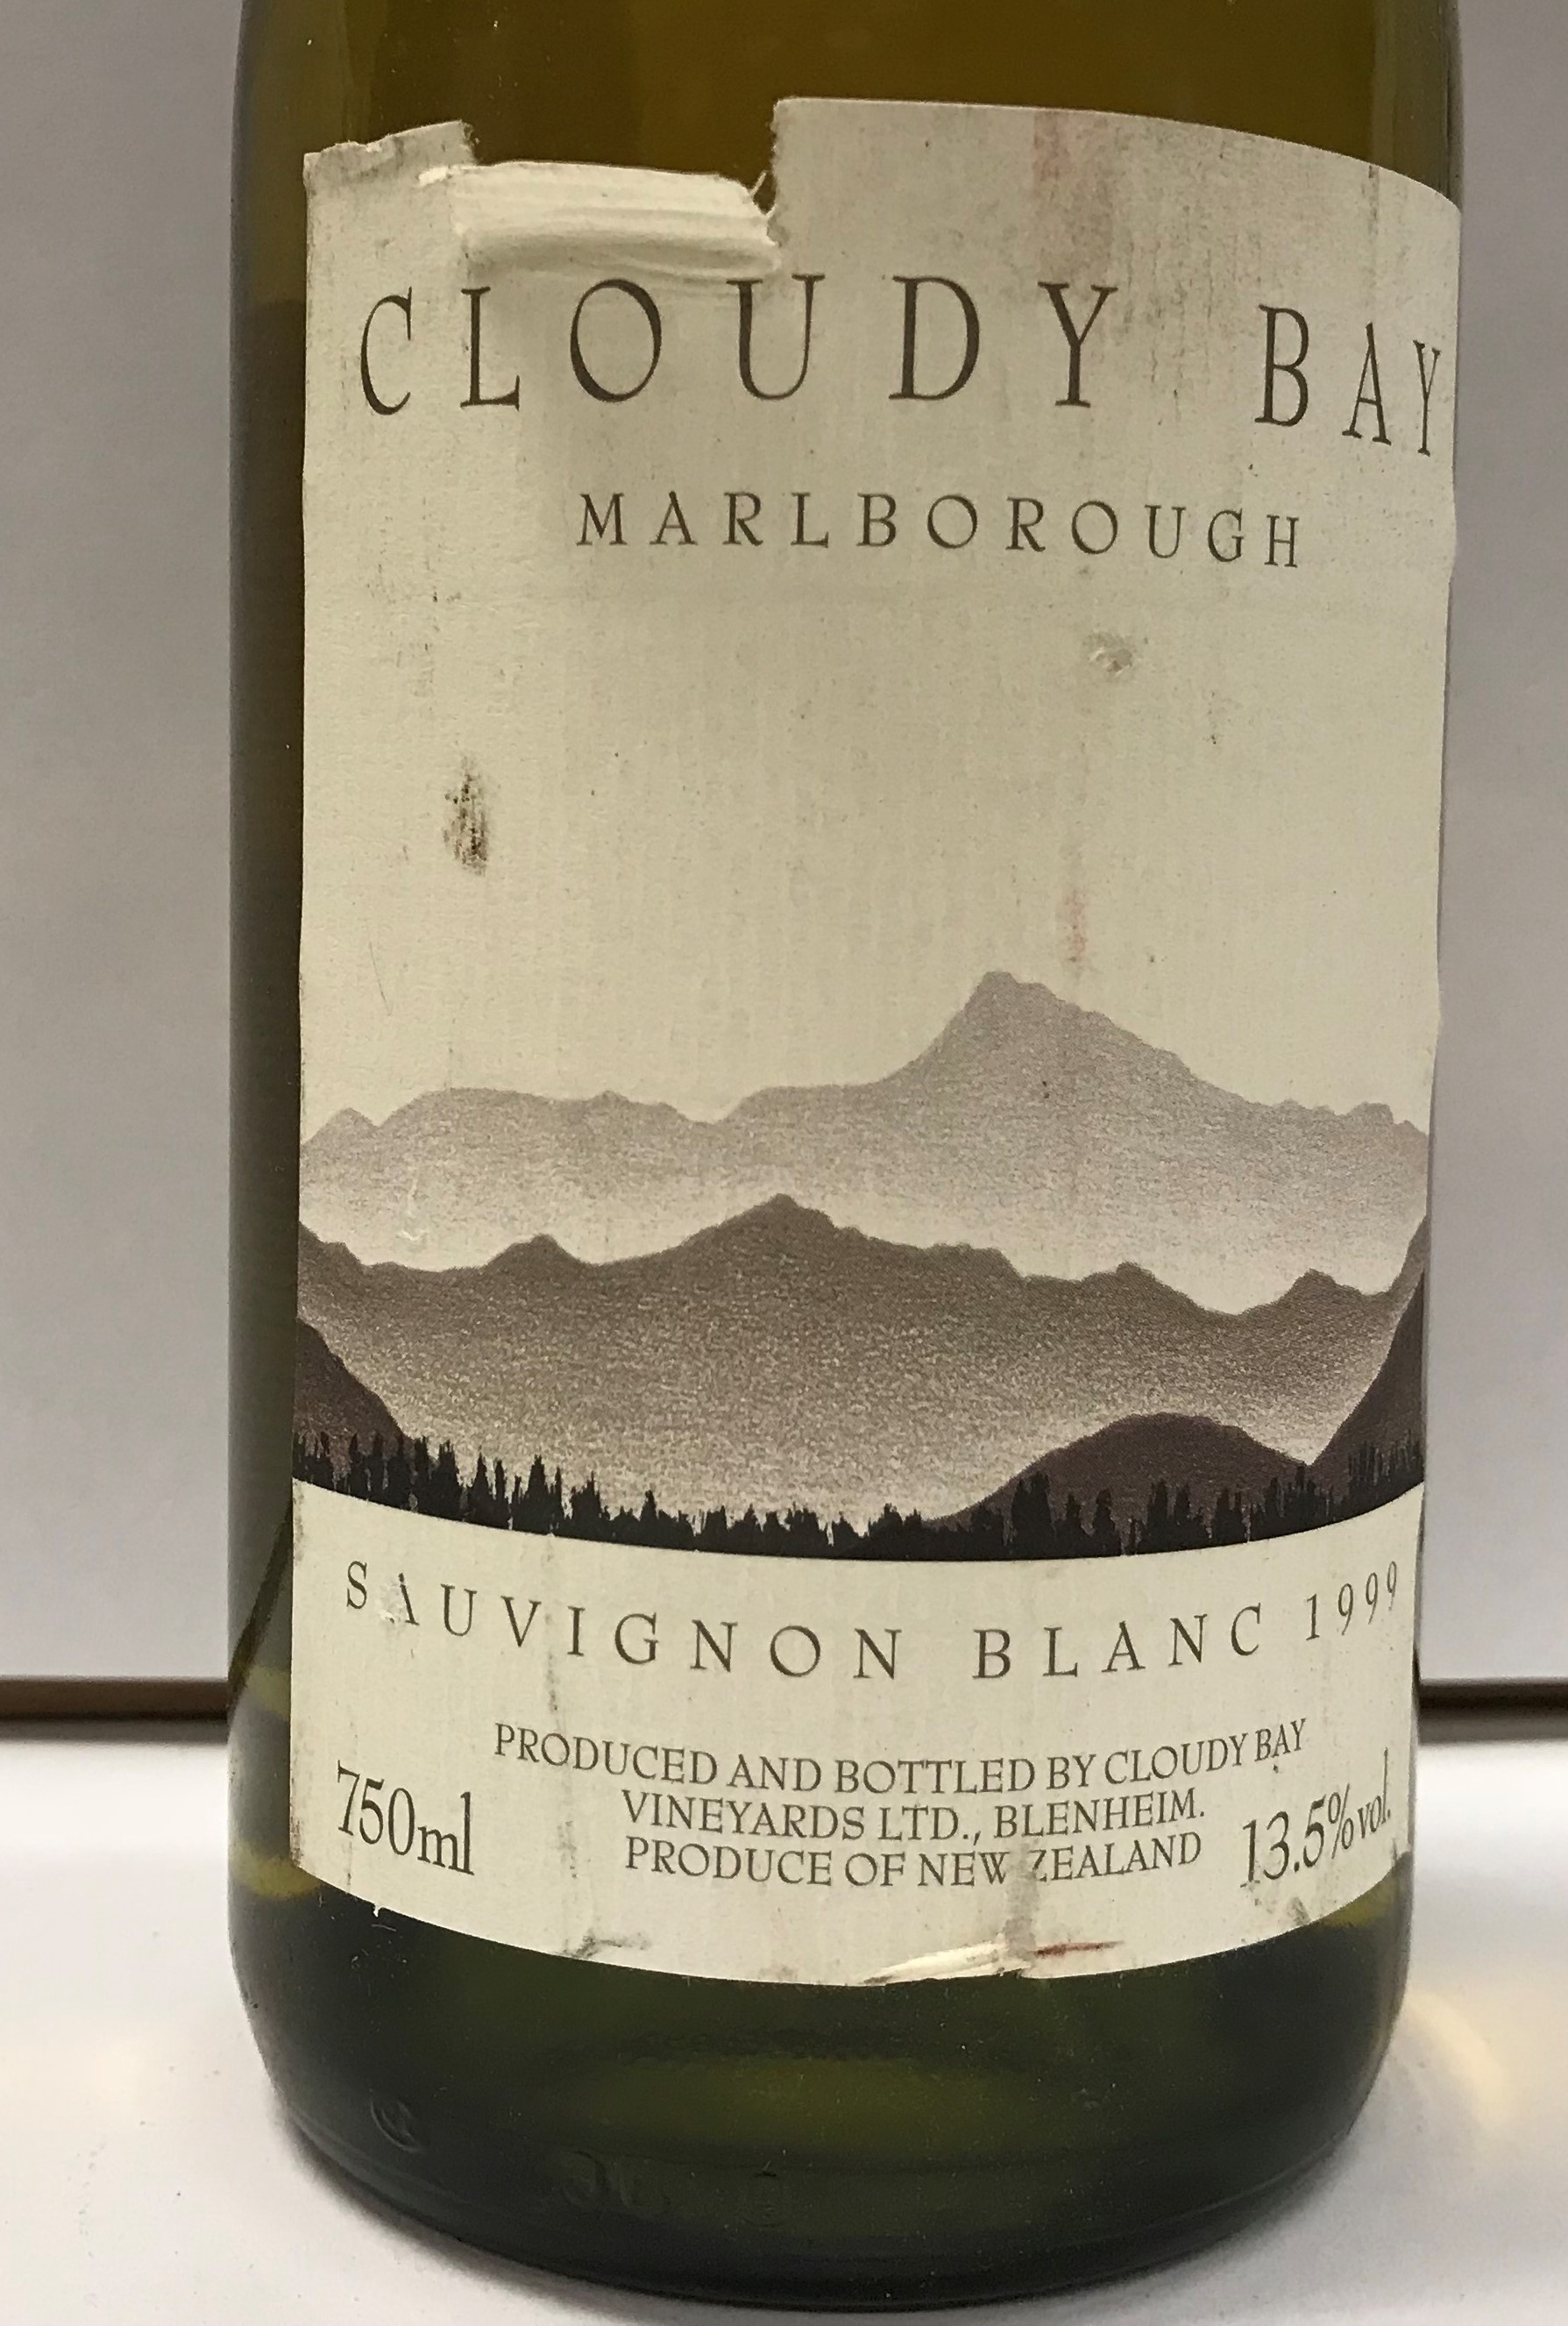 Eighteen bottles Cloudy Bay Marlborough Sauvignon Blanc 1999 - Image 2 of 2